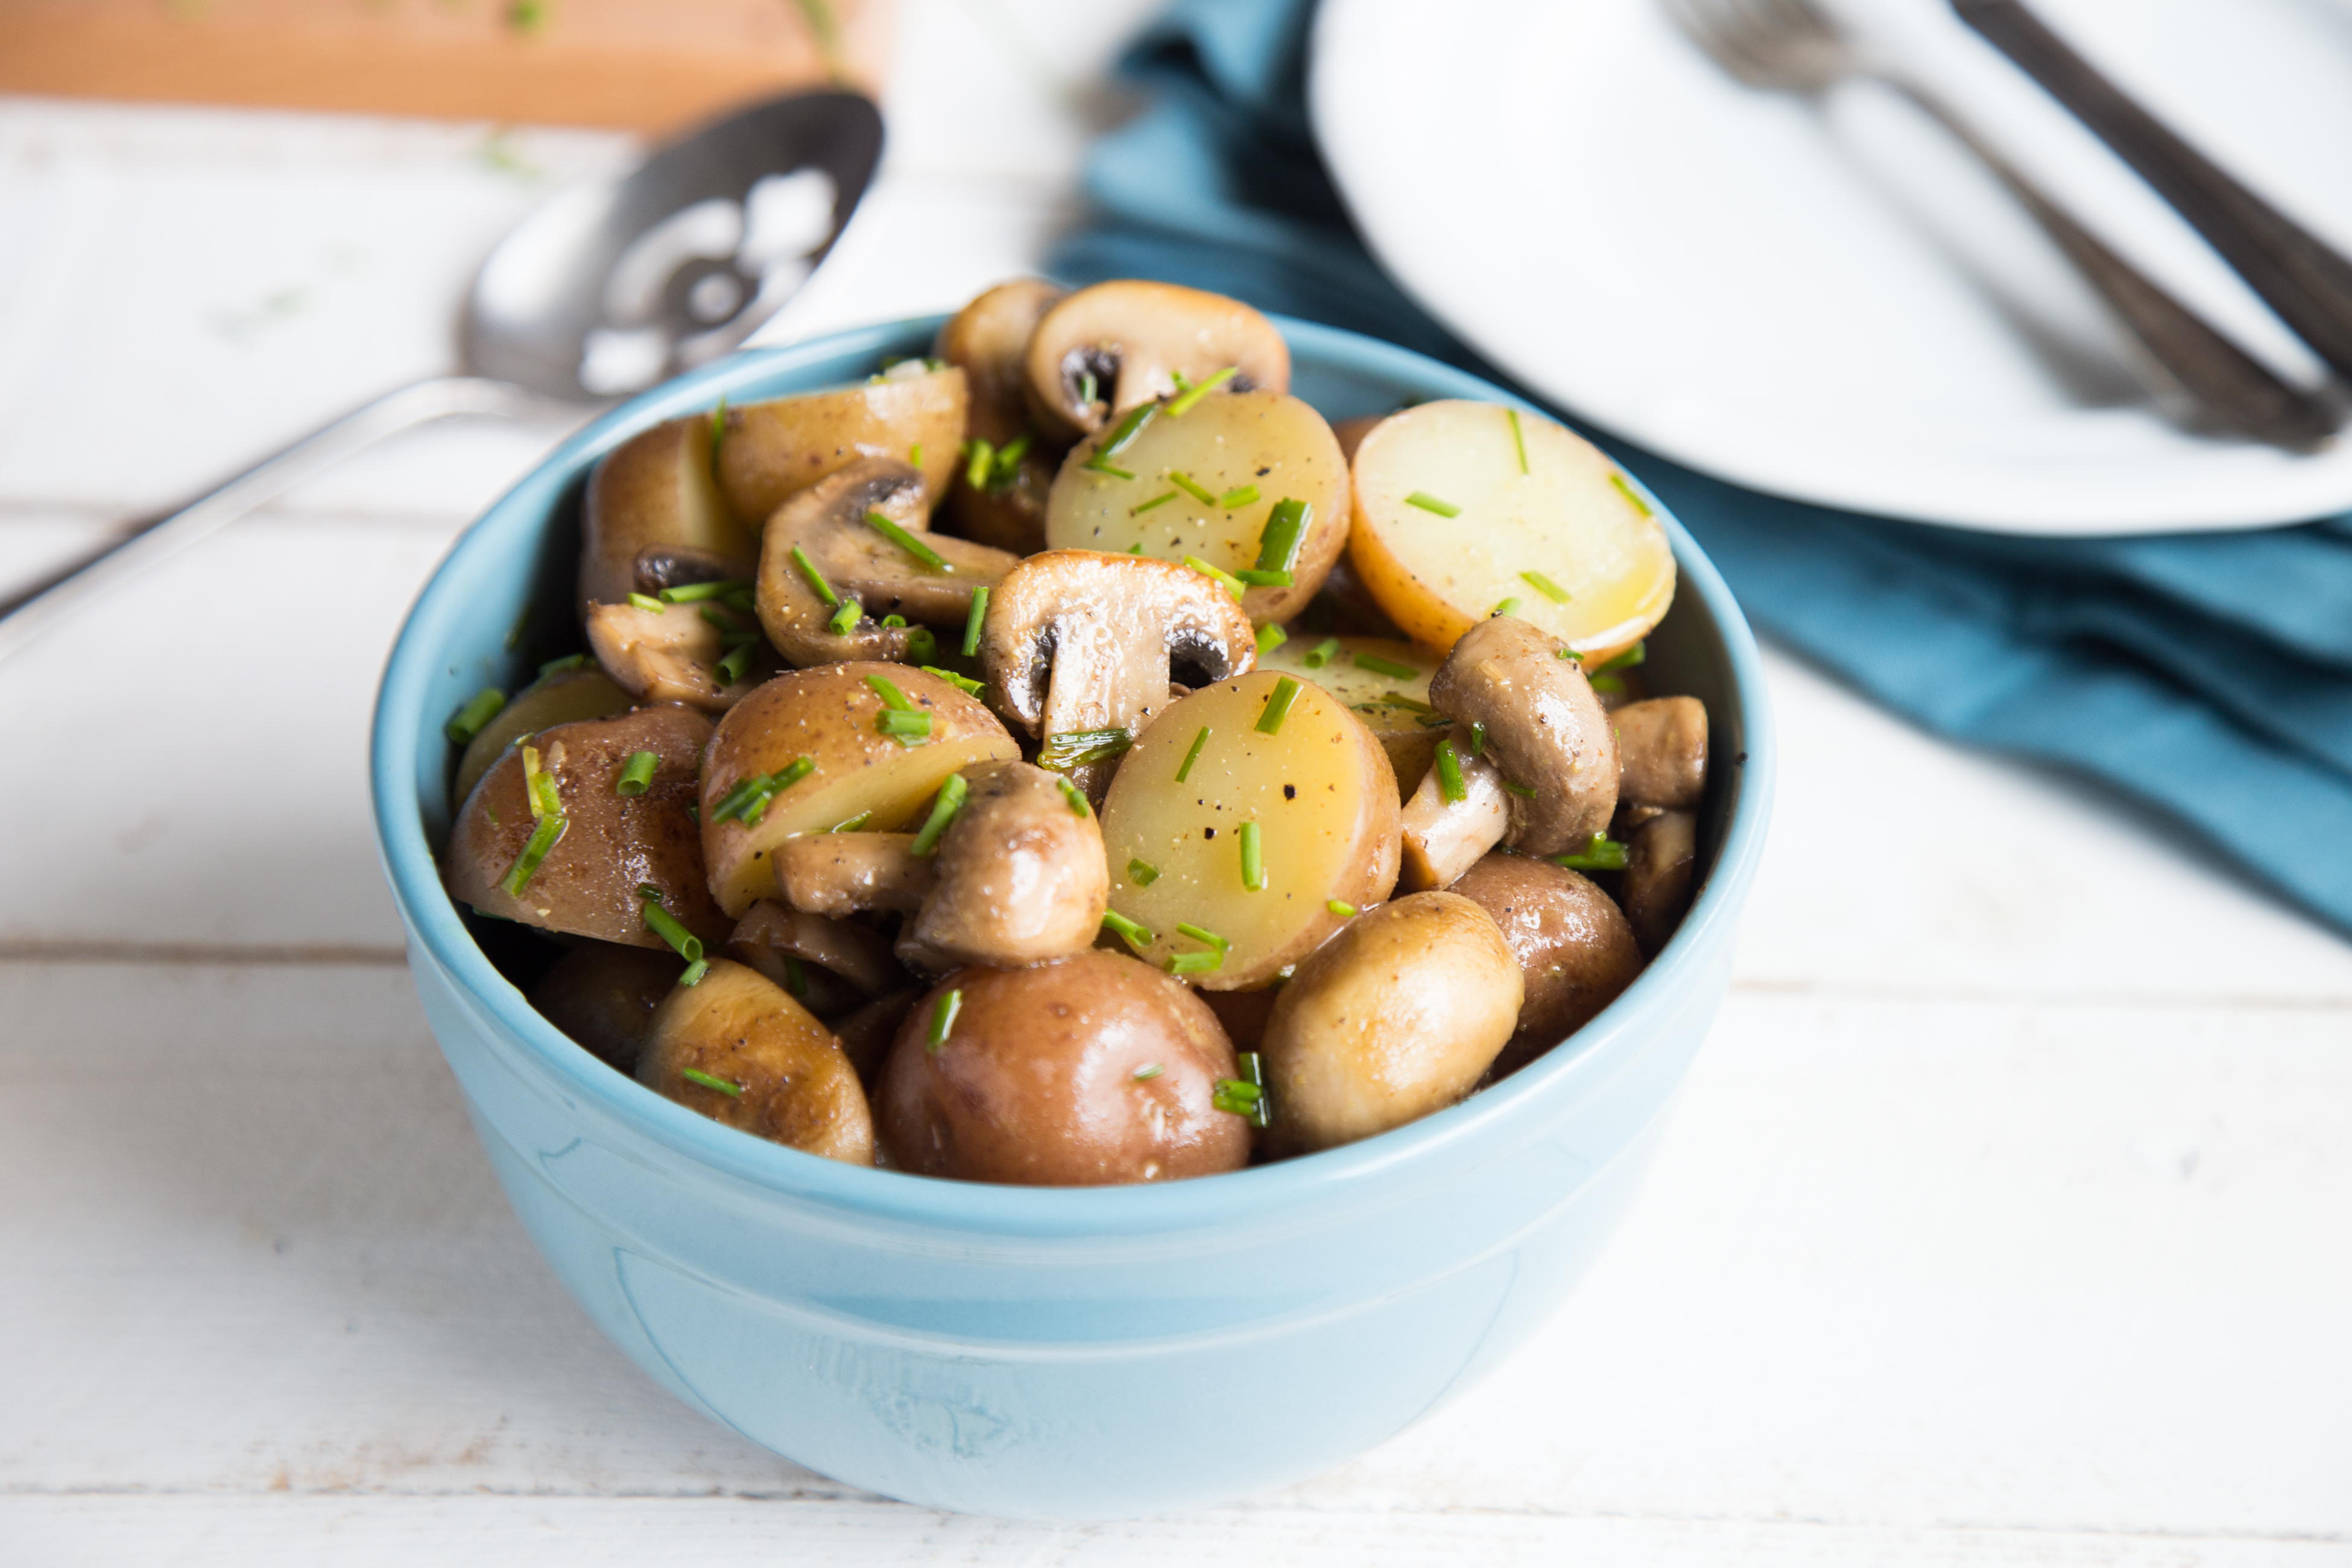 Mushroom & Chive Potato Salad